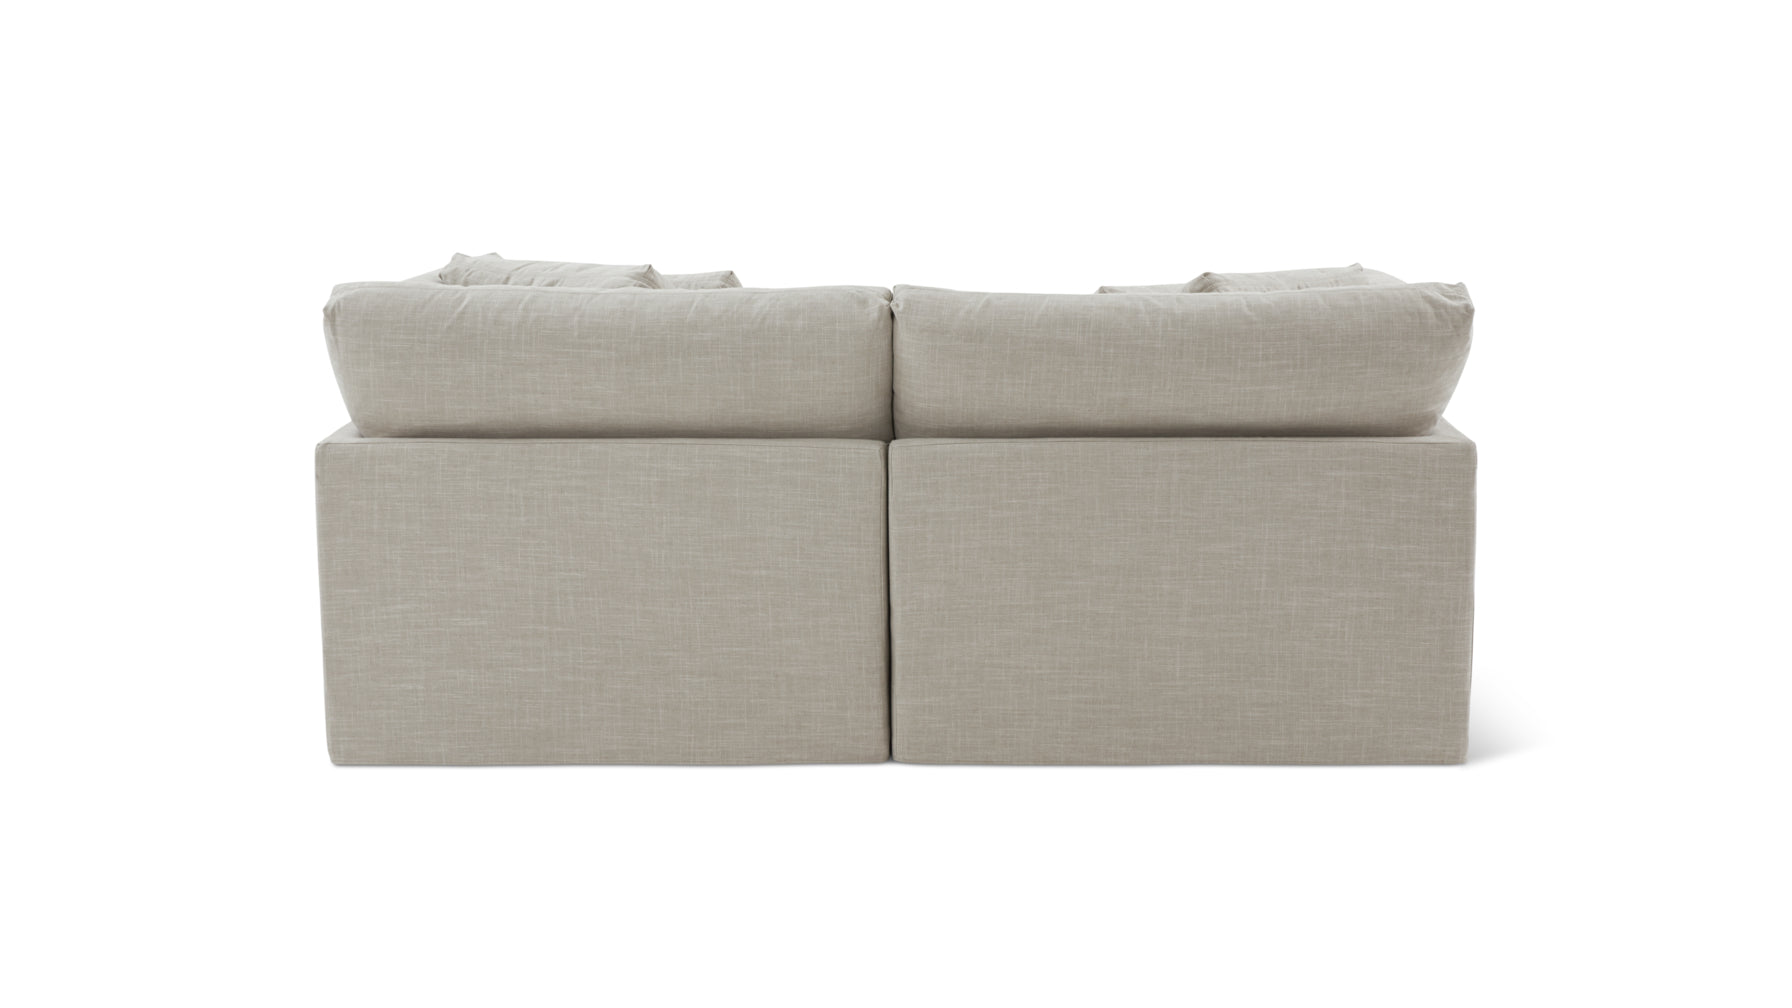 Get Together™ 2-Piece Modular Sofa, Large, Light Pebble - Image 8